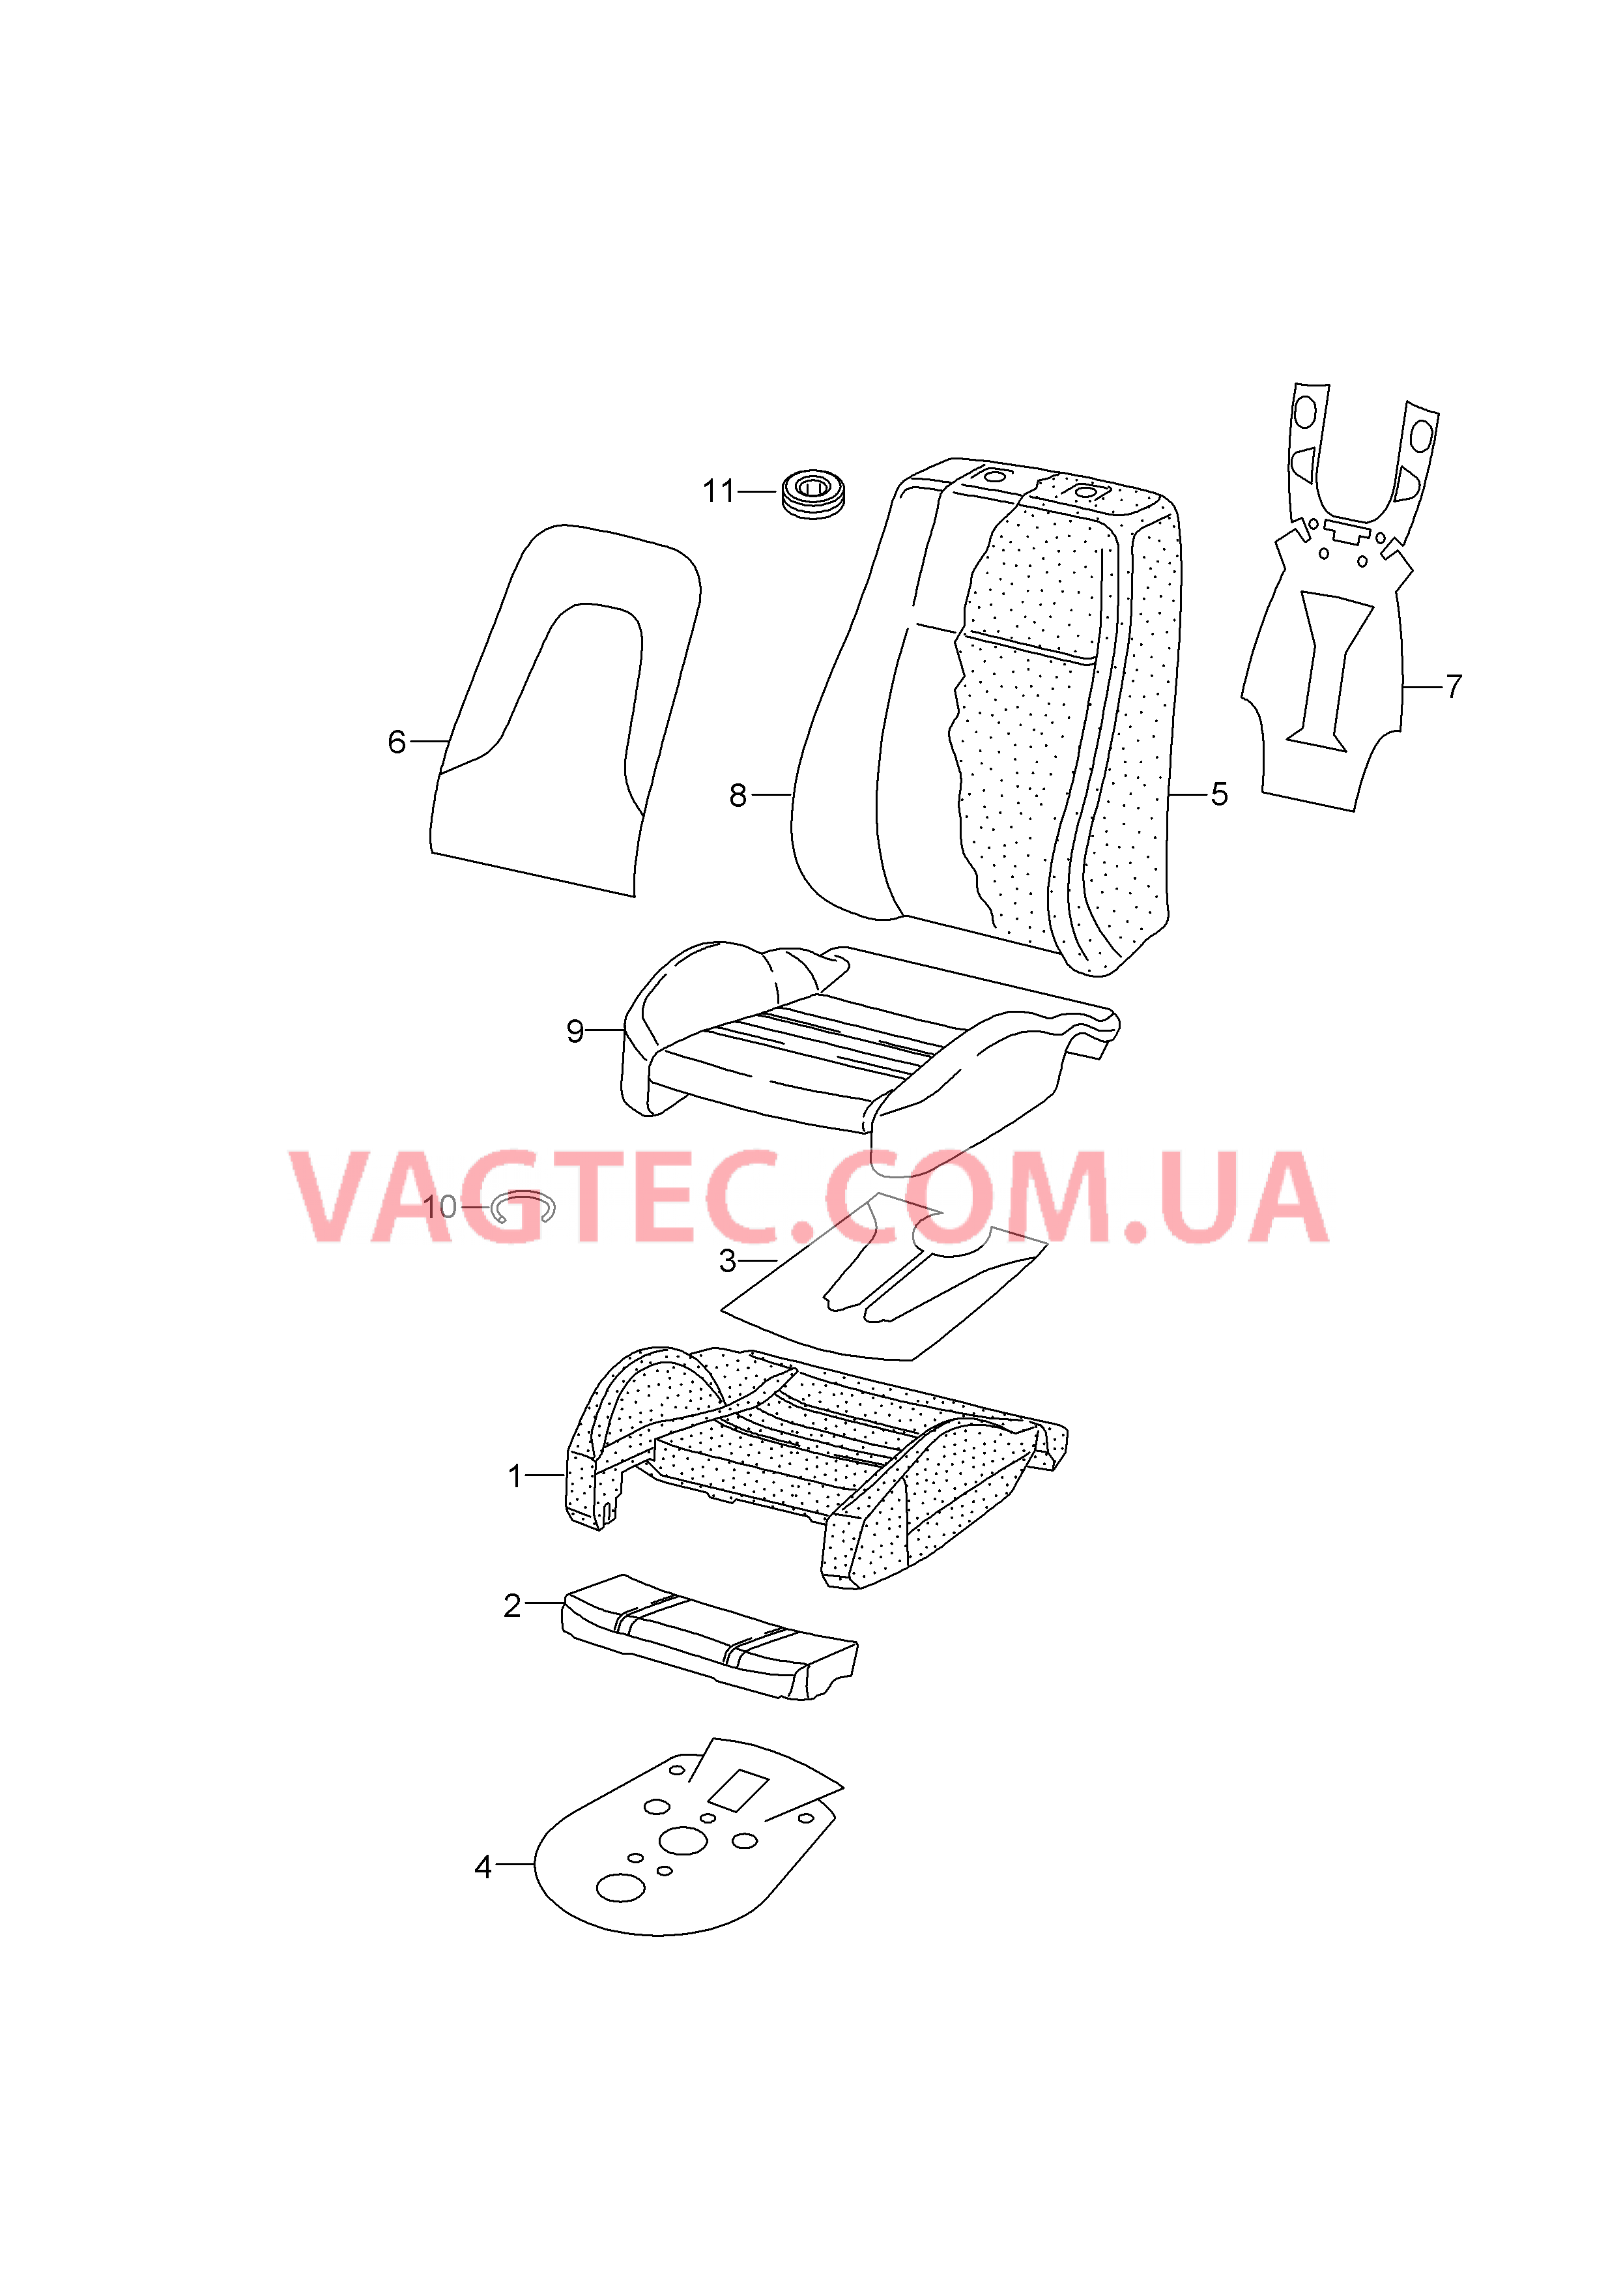 Подушка сиденья Набивка спинки Обивка подушки и спинки сиден.  для AUDI A5 2017